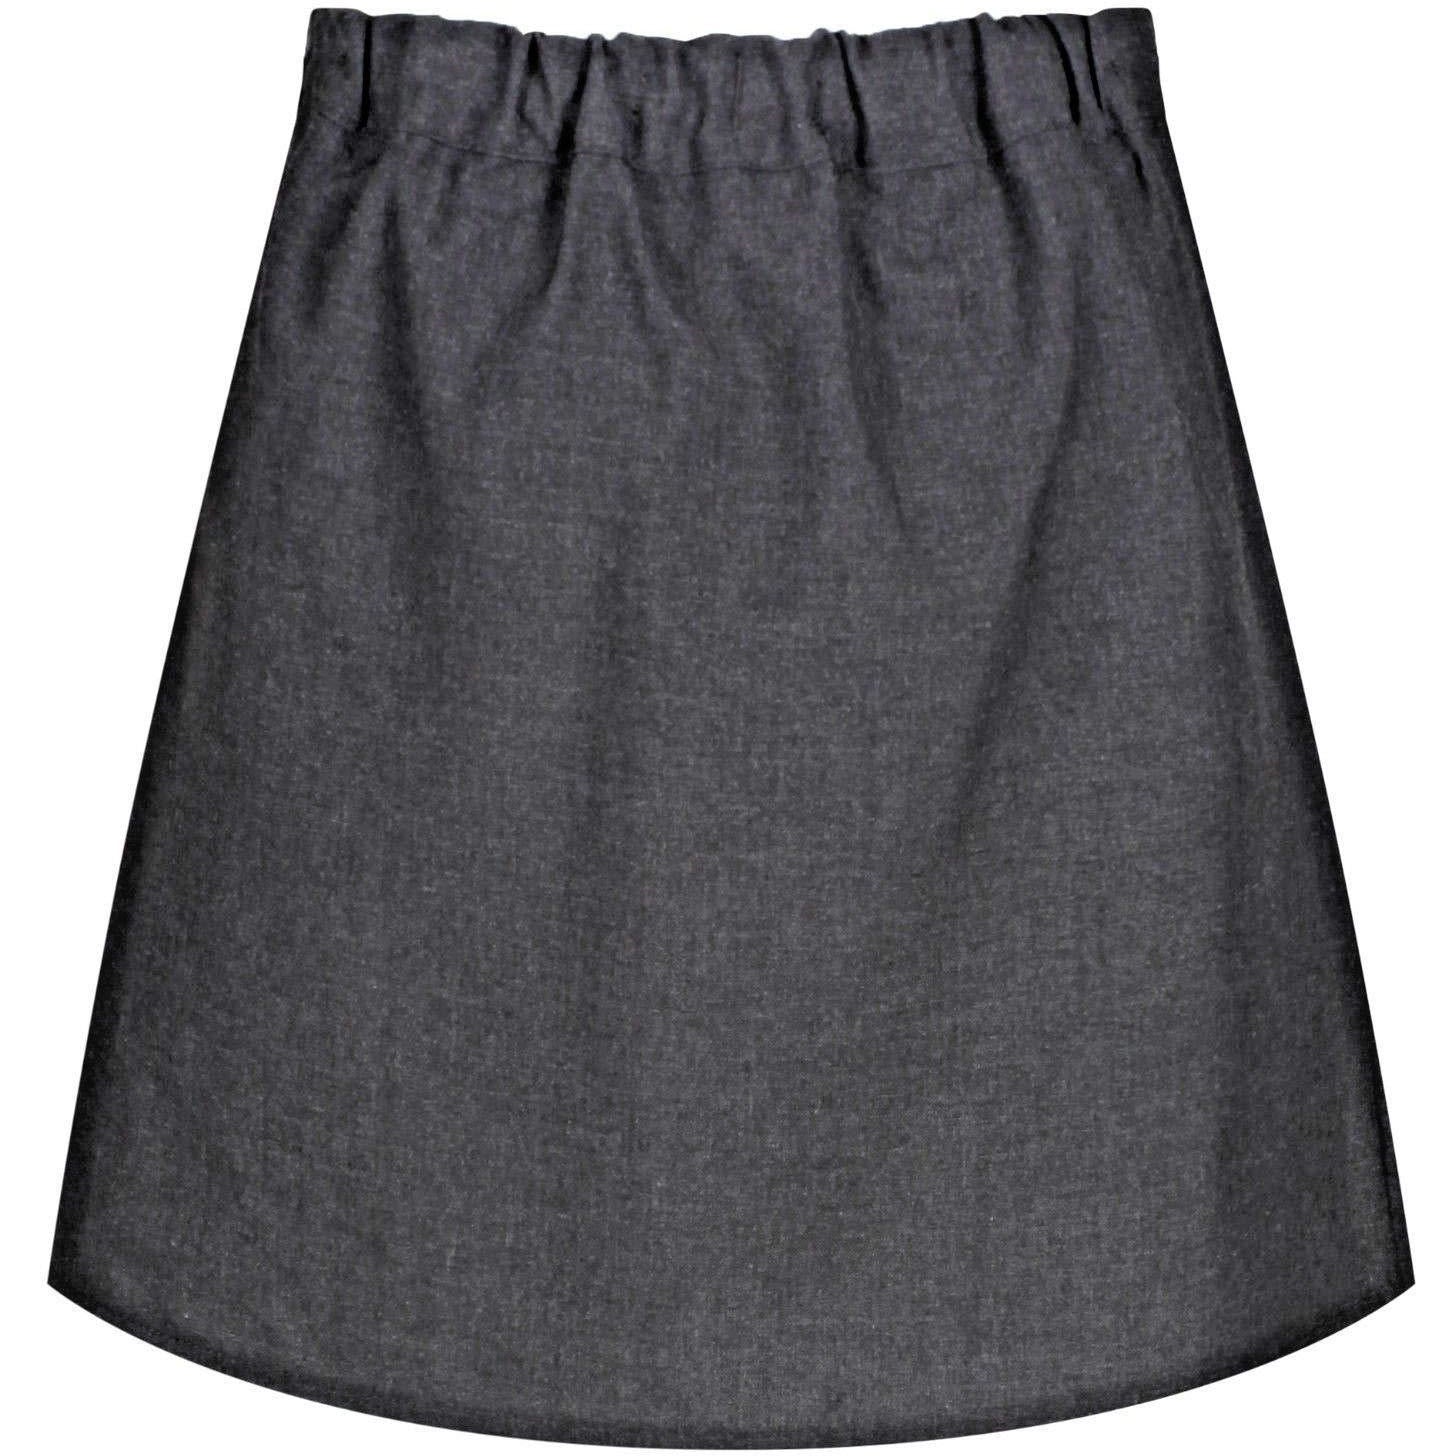 Ages 4-13 Girls School Skirt Adjustable Waist Black Grey Pleated ...